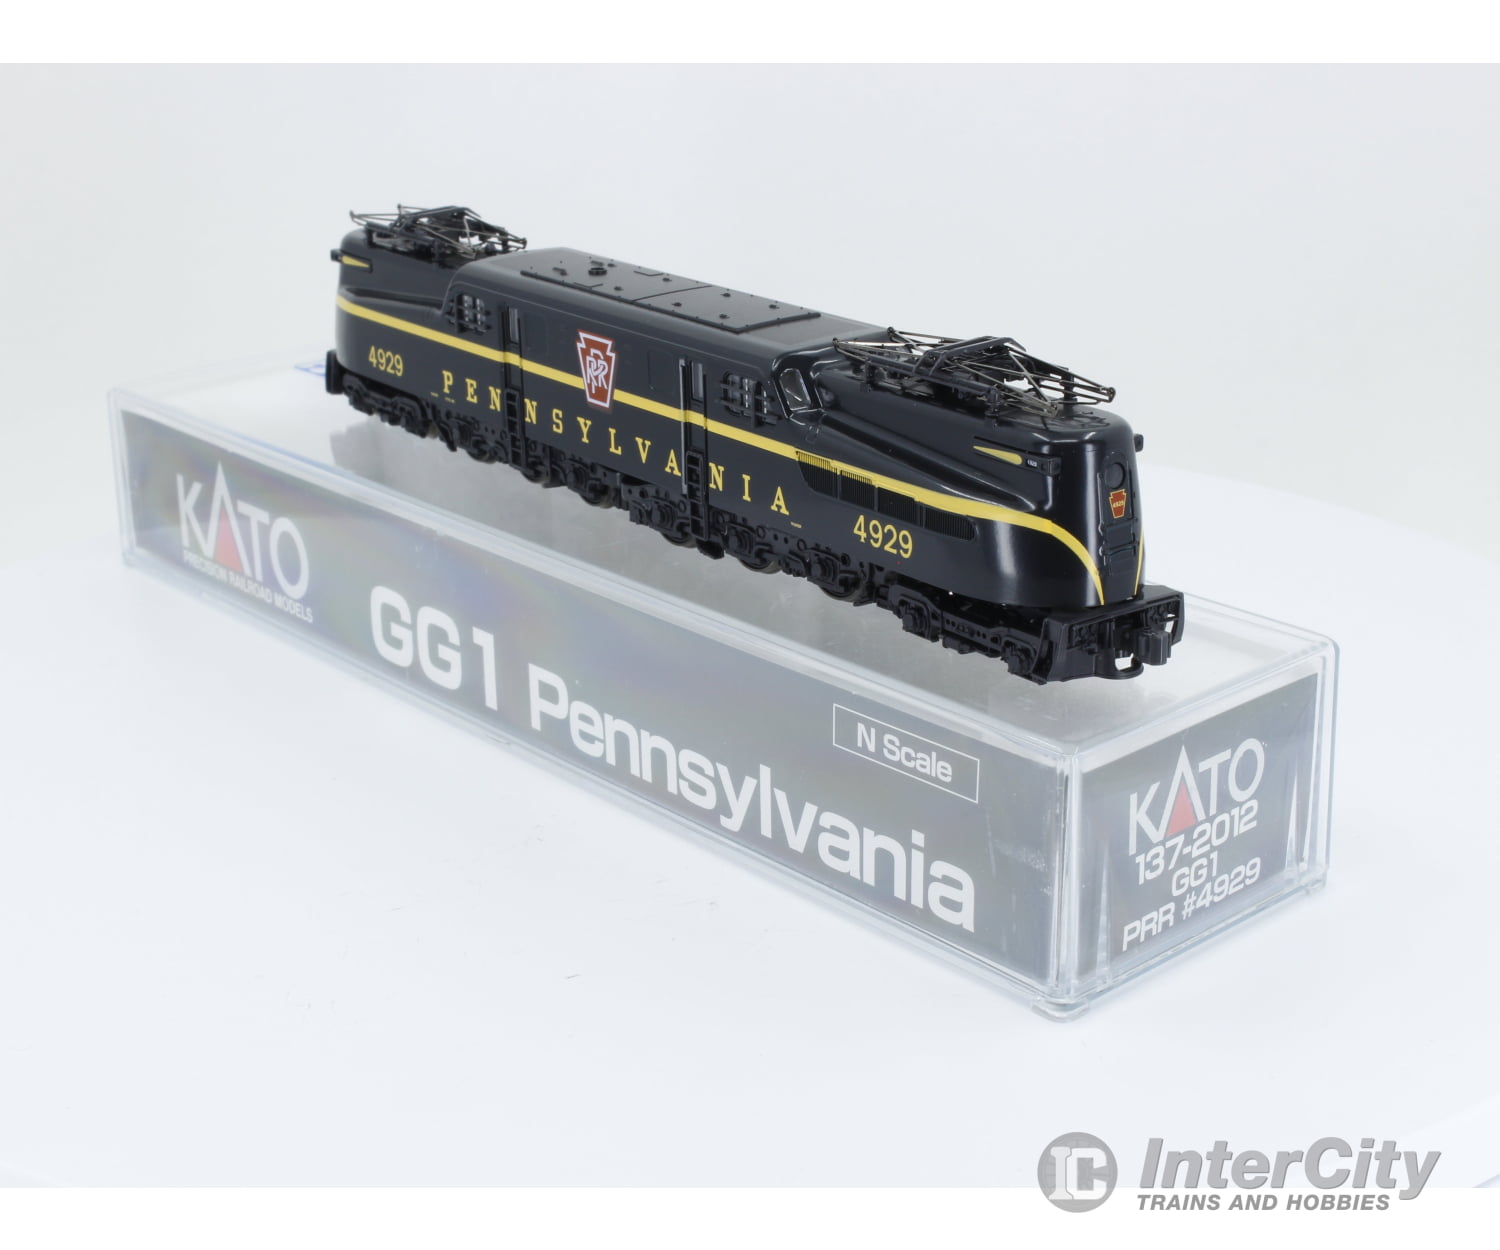 Kato 137-2012 N Gg1 Locomotive Pennsylvania (Prr) 4929 Analog Dc Locomotives